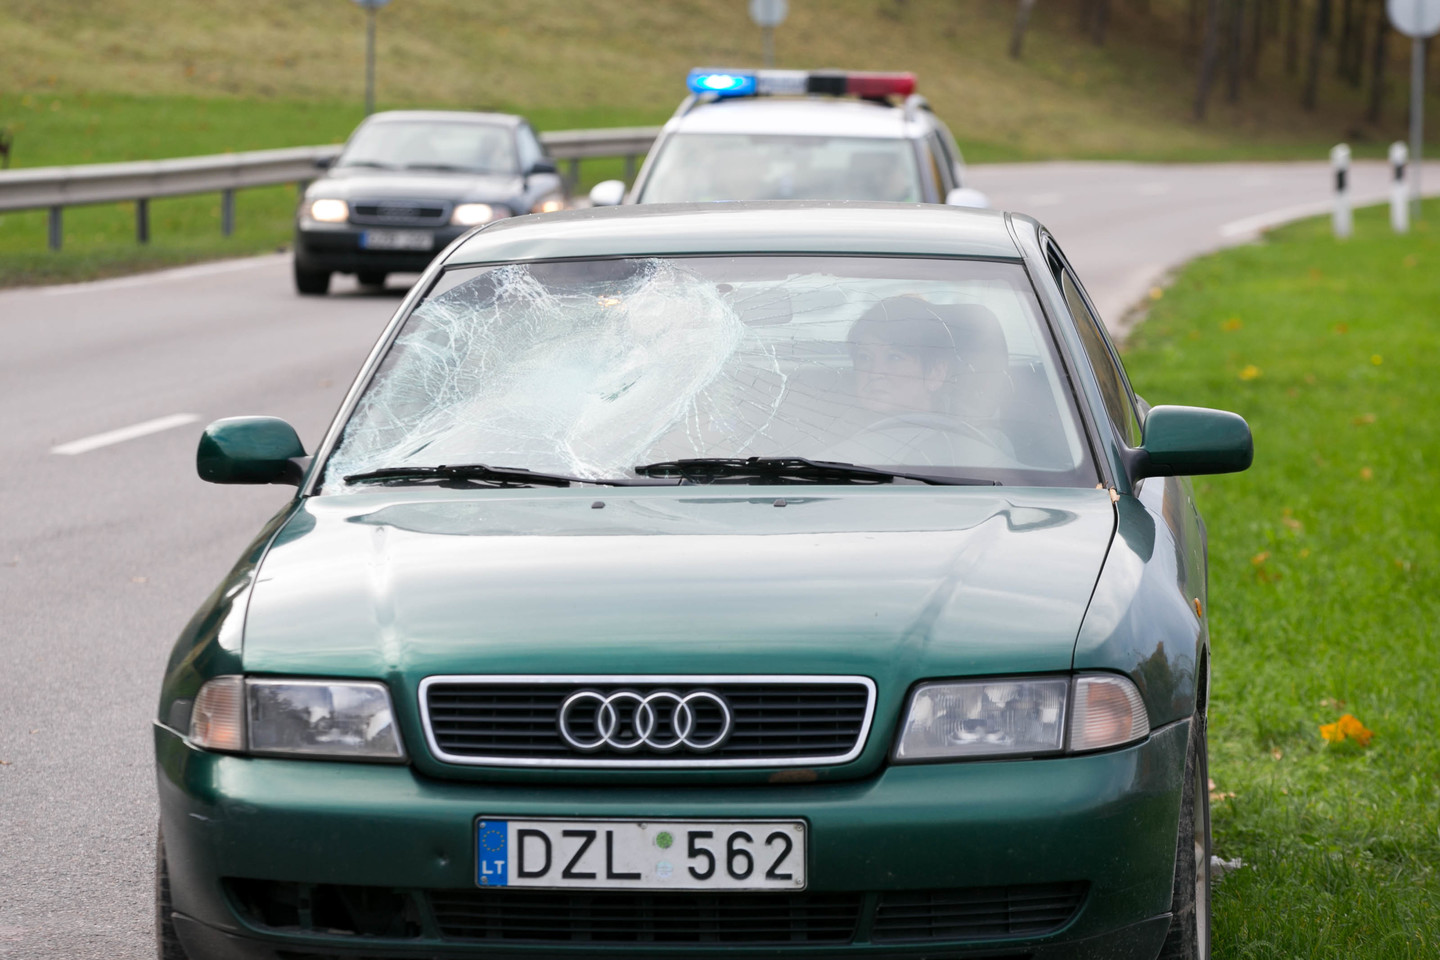  Vilniuje „Audi“ partrenkė dviratininkę, ji neteko sąmonės.<br> T.Bauro nuotr.